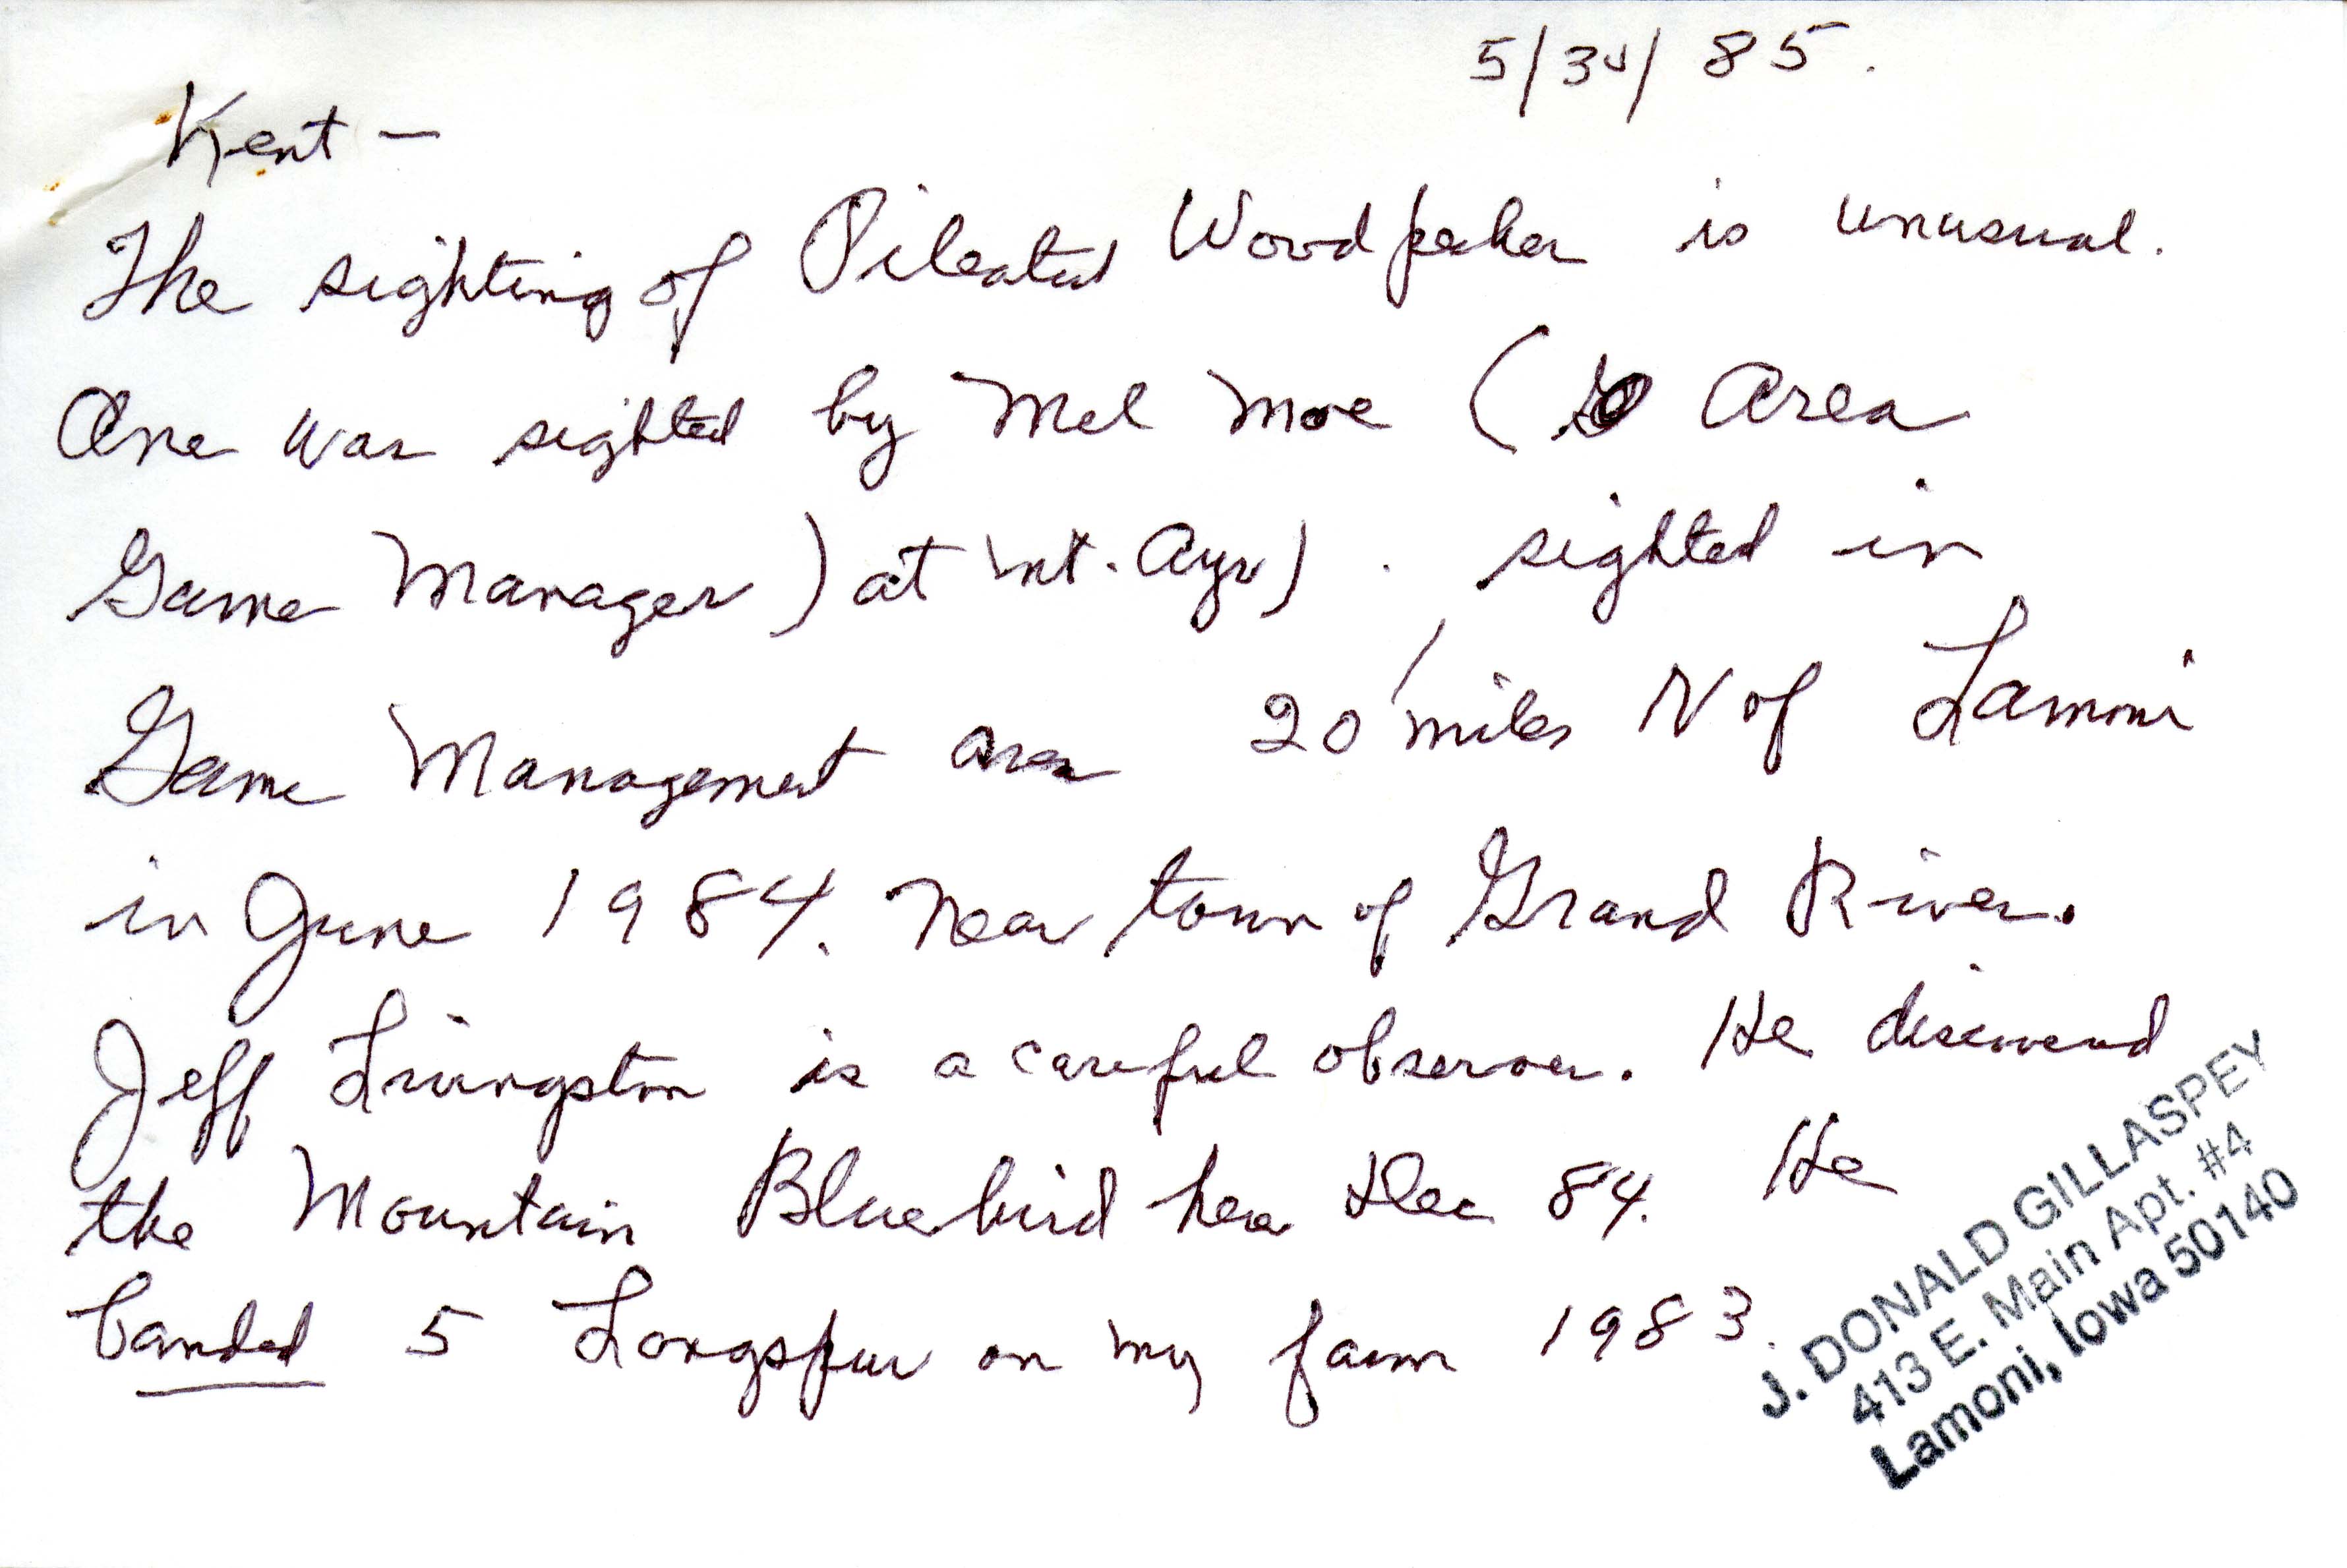 J. Donald Gillaspey letter to Thomas H. Kent, May 30, 1985, regarding bird sightings